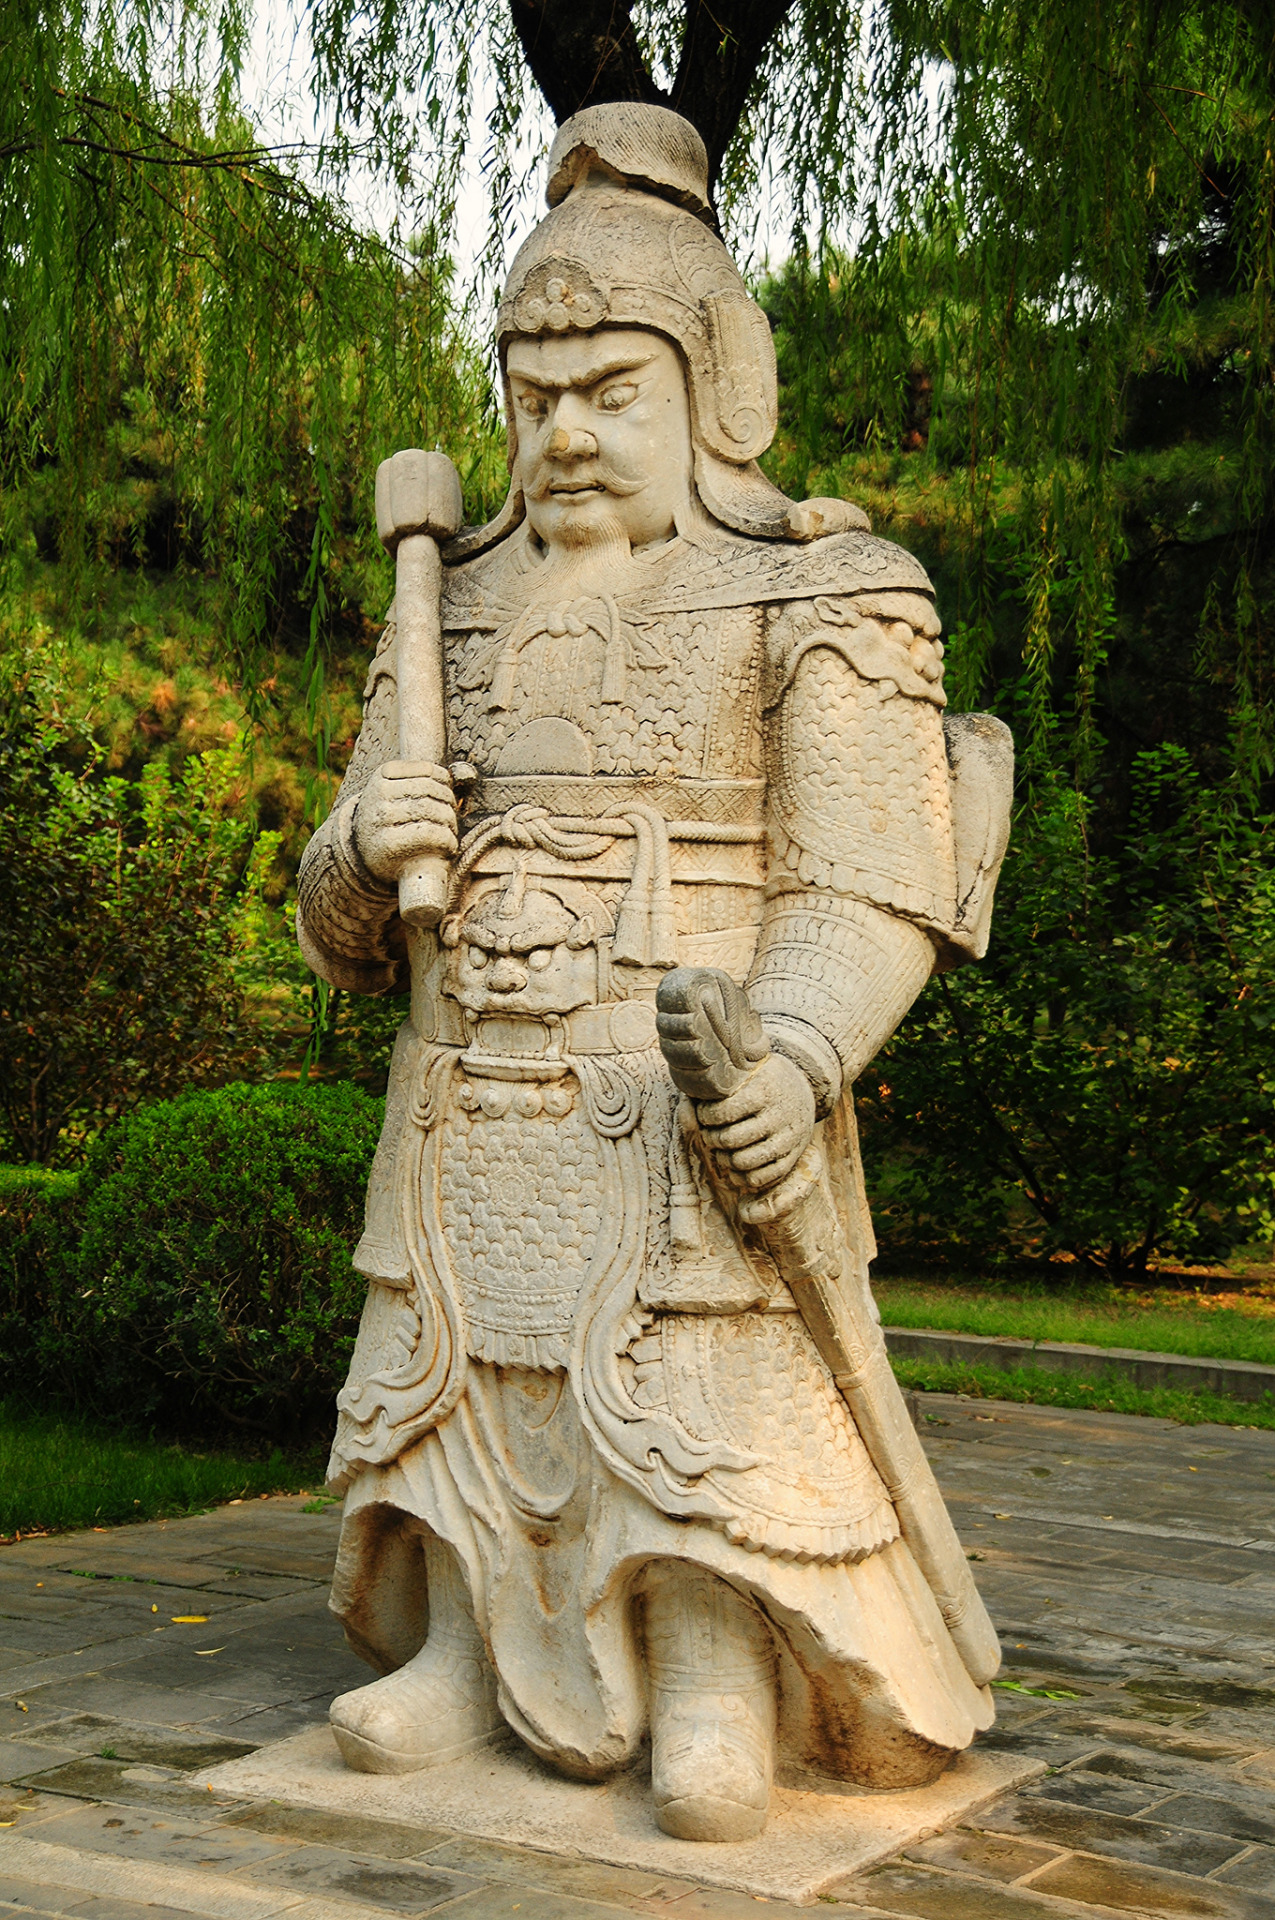 Ming tombs guardian near Beijing / China